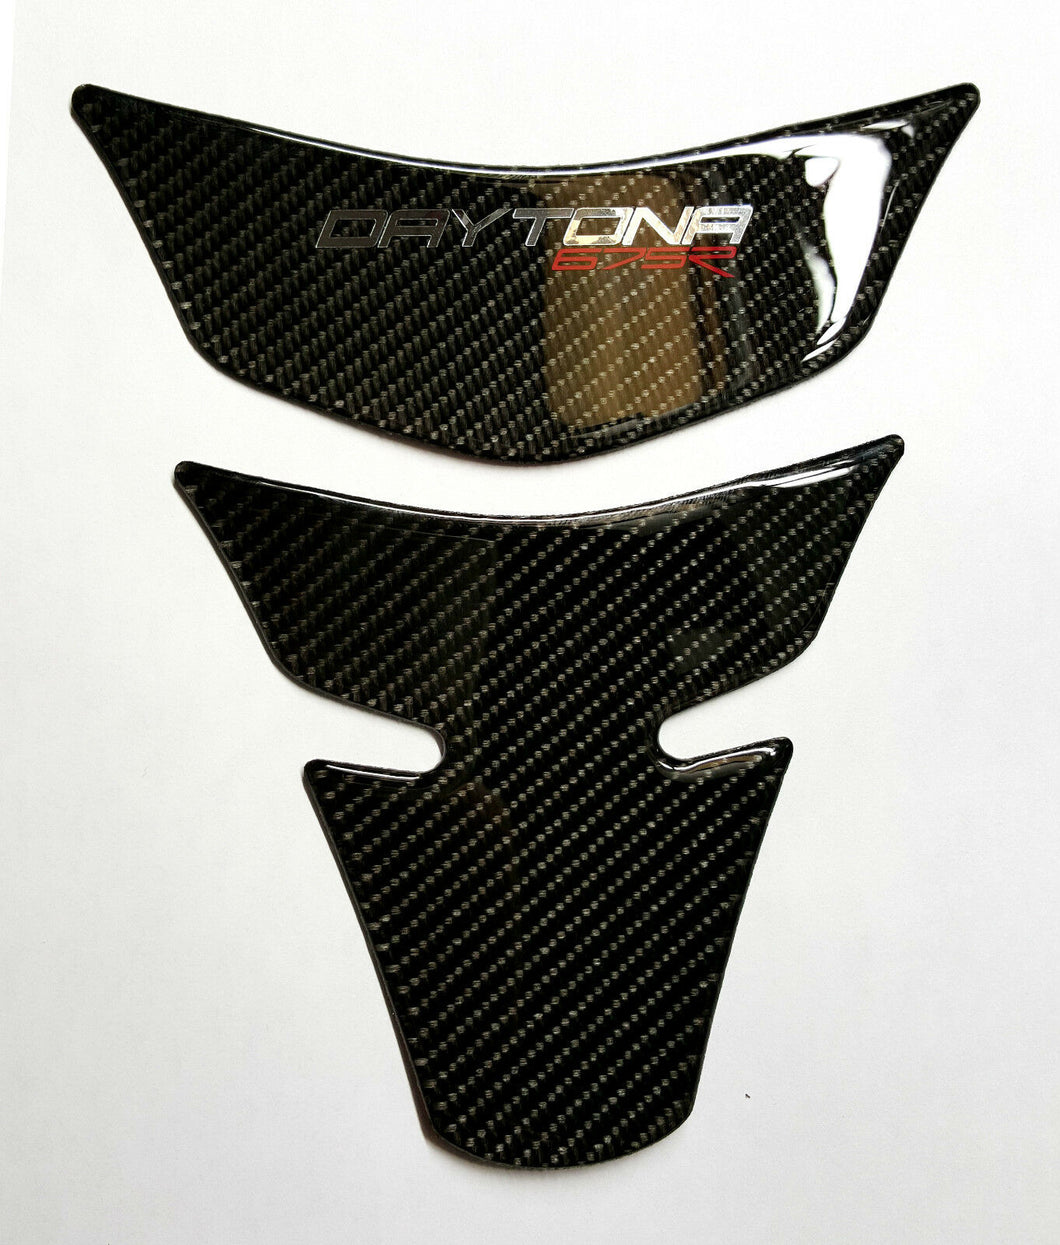 Fit Triumph Real Carbon Fiber tank pad Protector Sticker trim guard decal